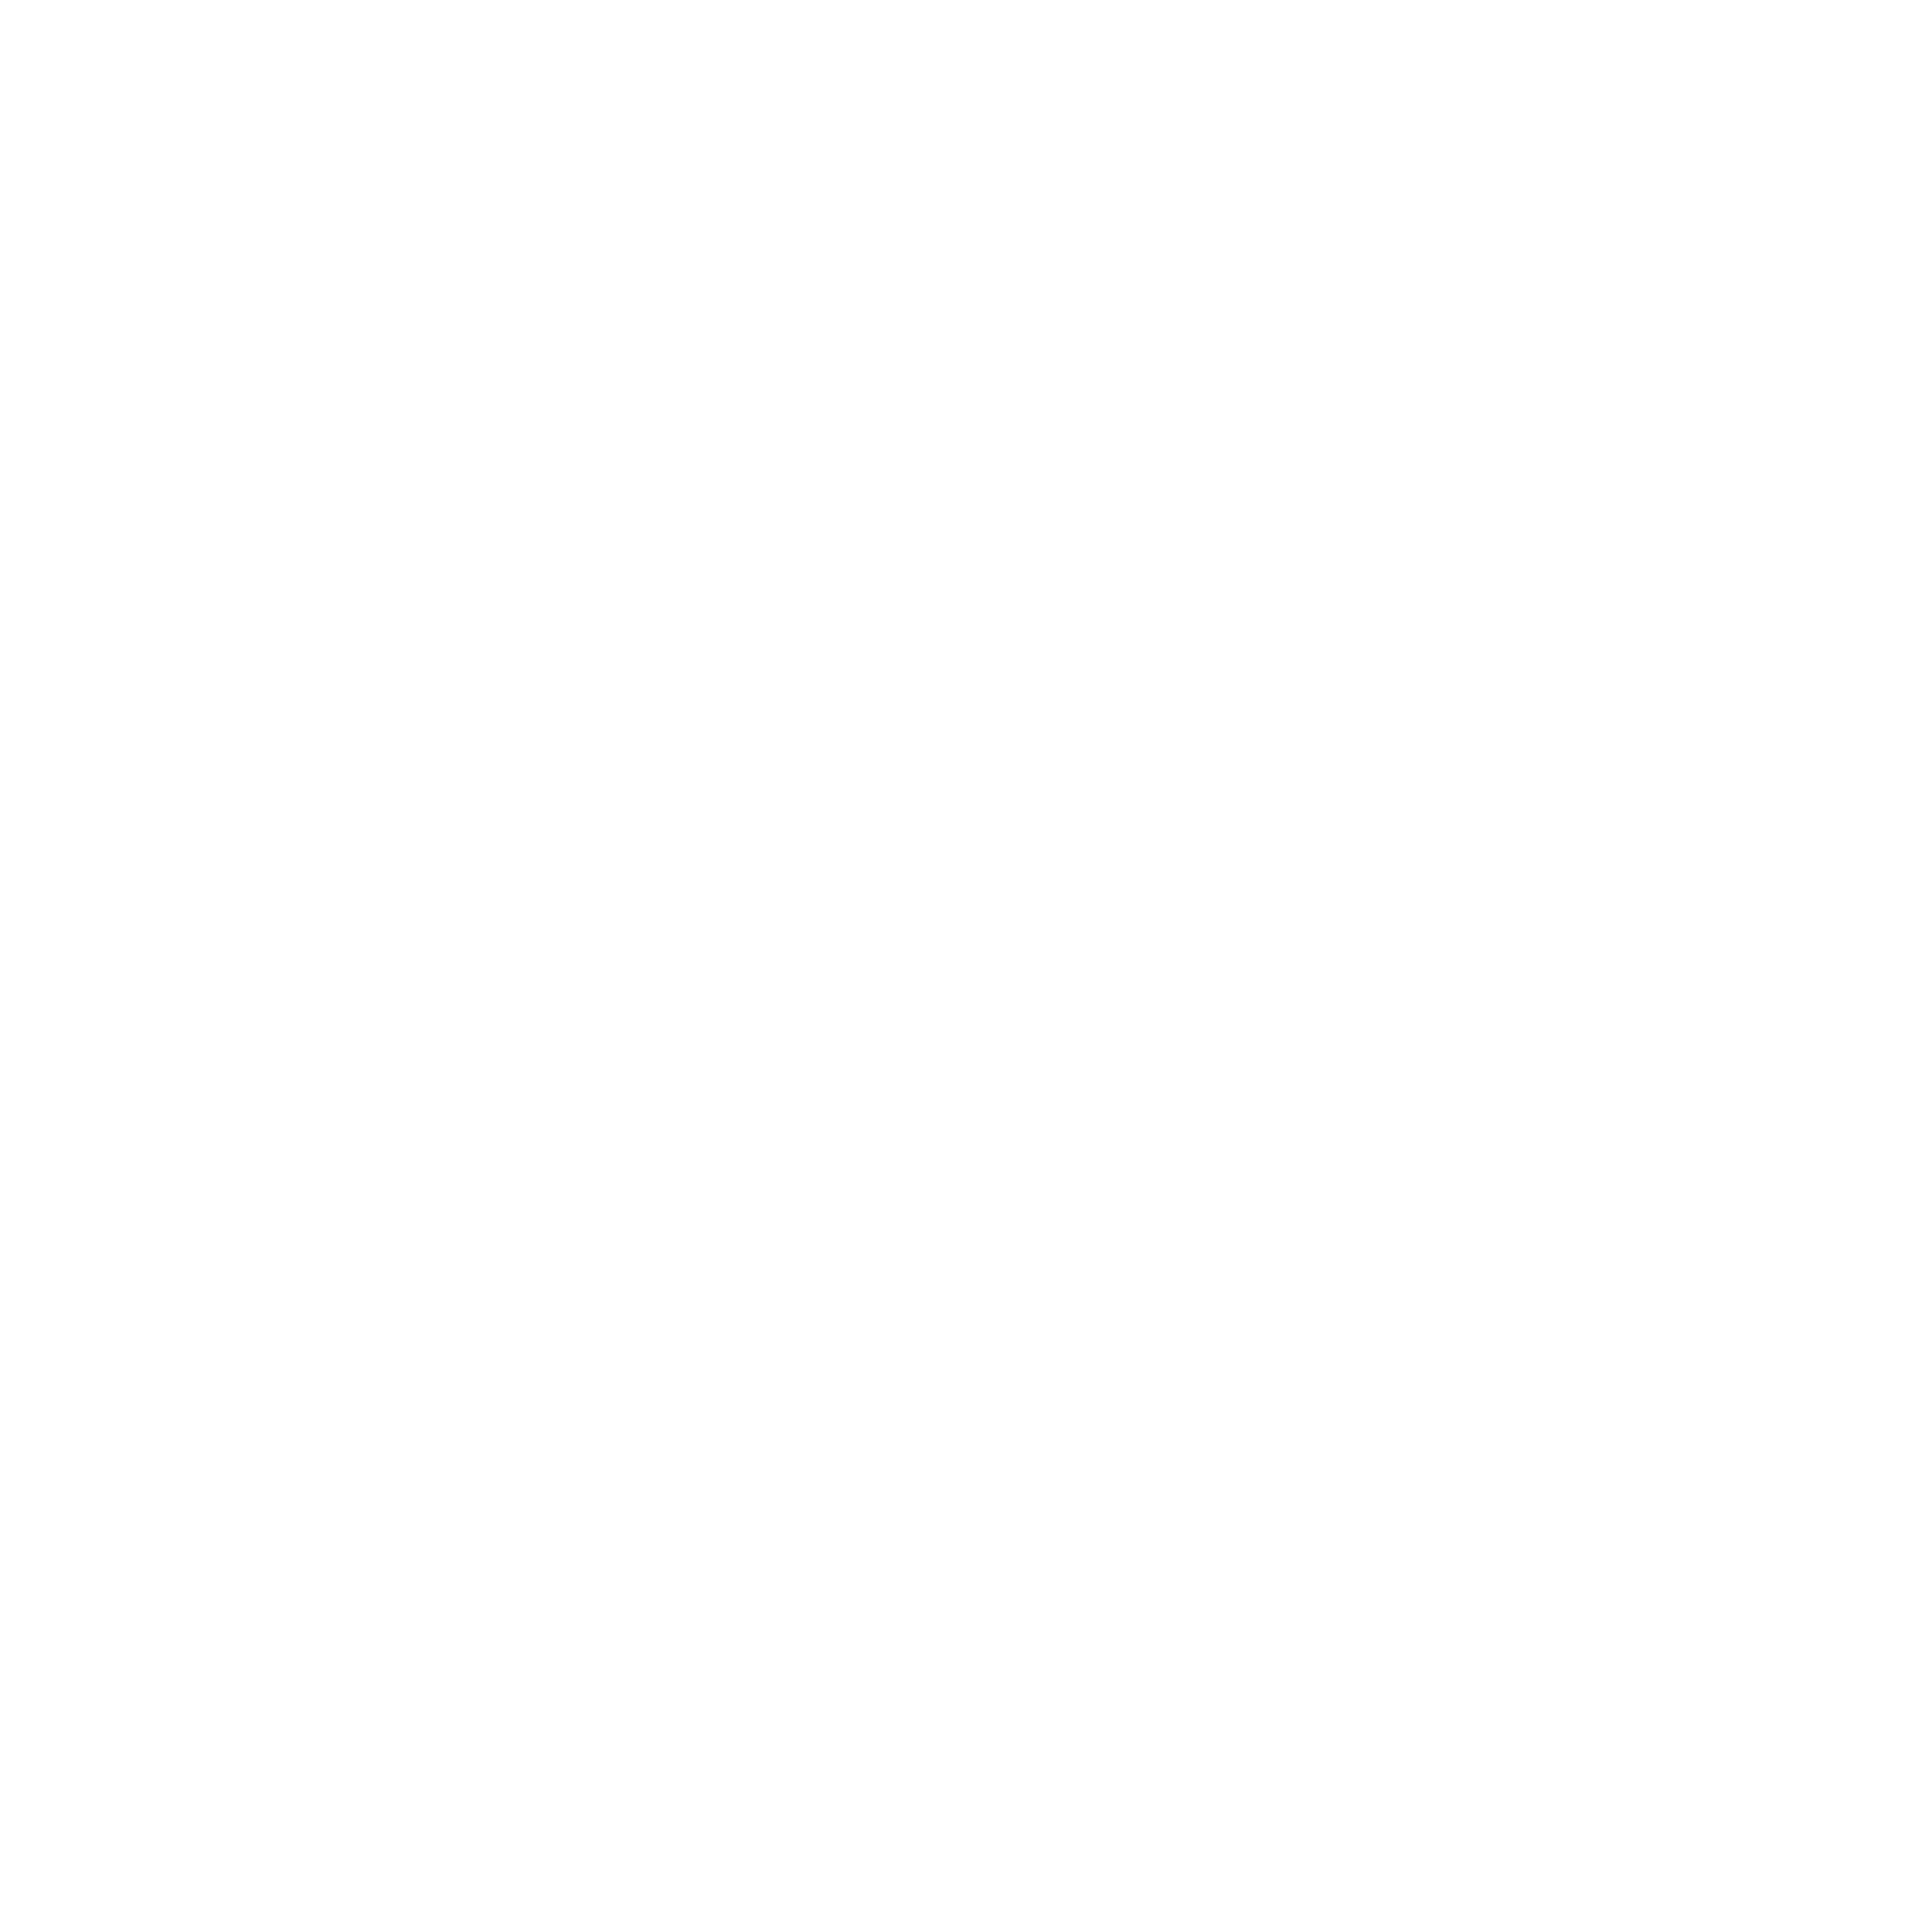 Liliana de Cartagena | GetYourGuide Supplier